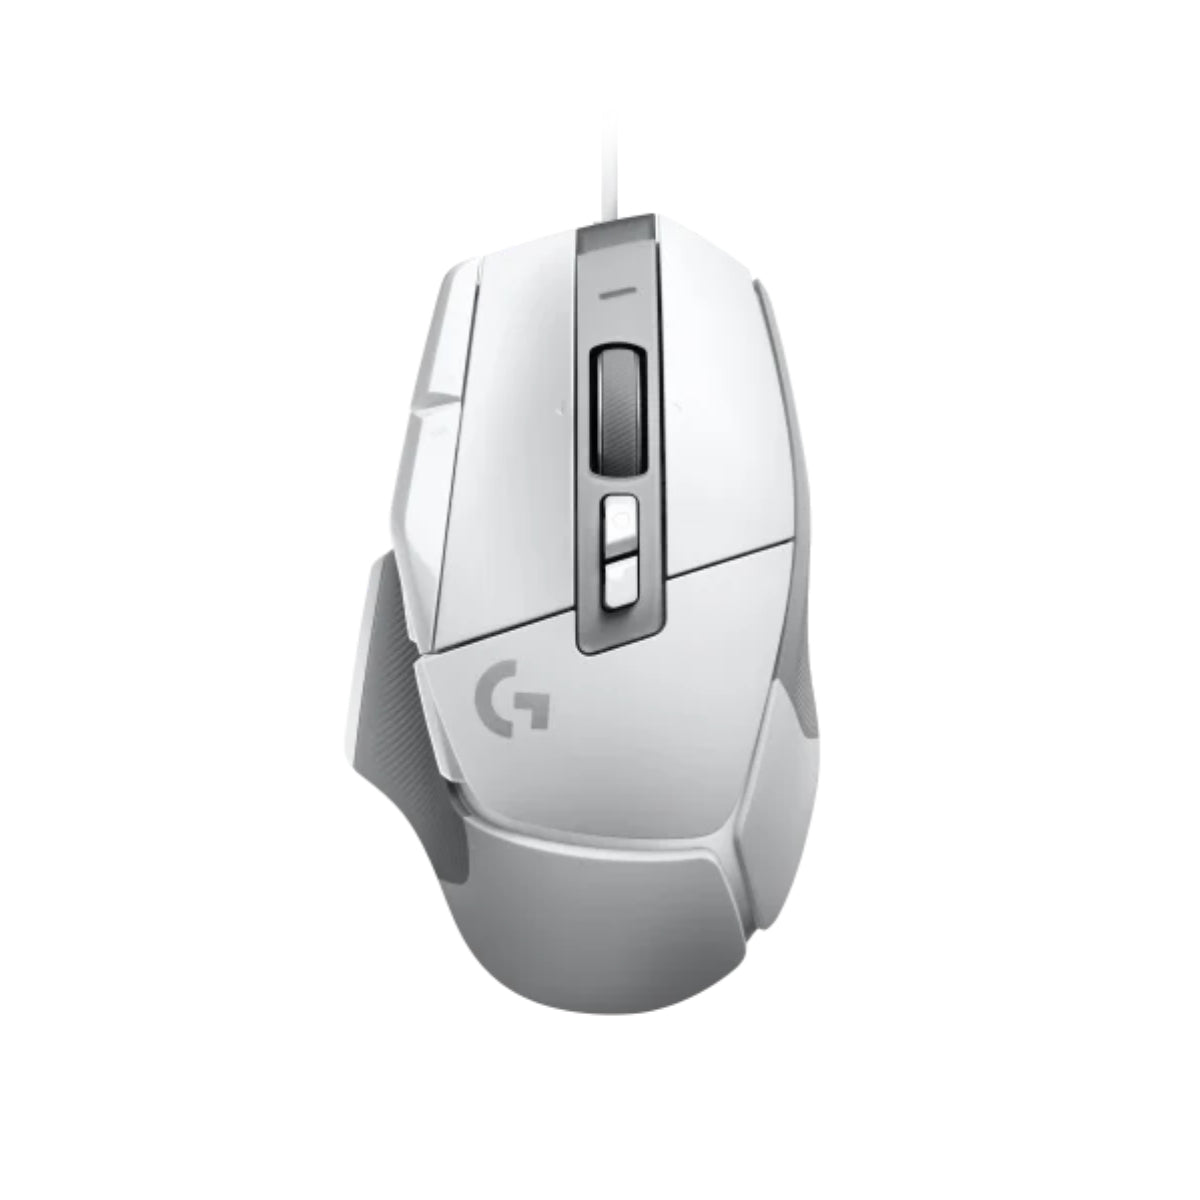 Logitech G502X Plus Wired Gaming Mouse - White - فأرة ألعاب - Store 974 | ستور ٩٧٤